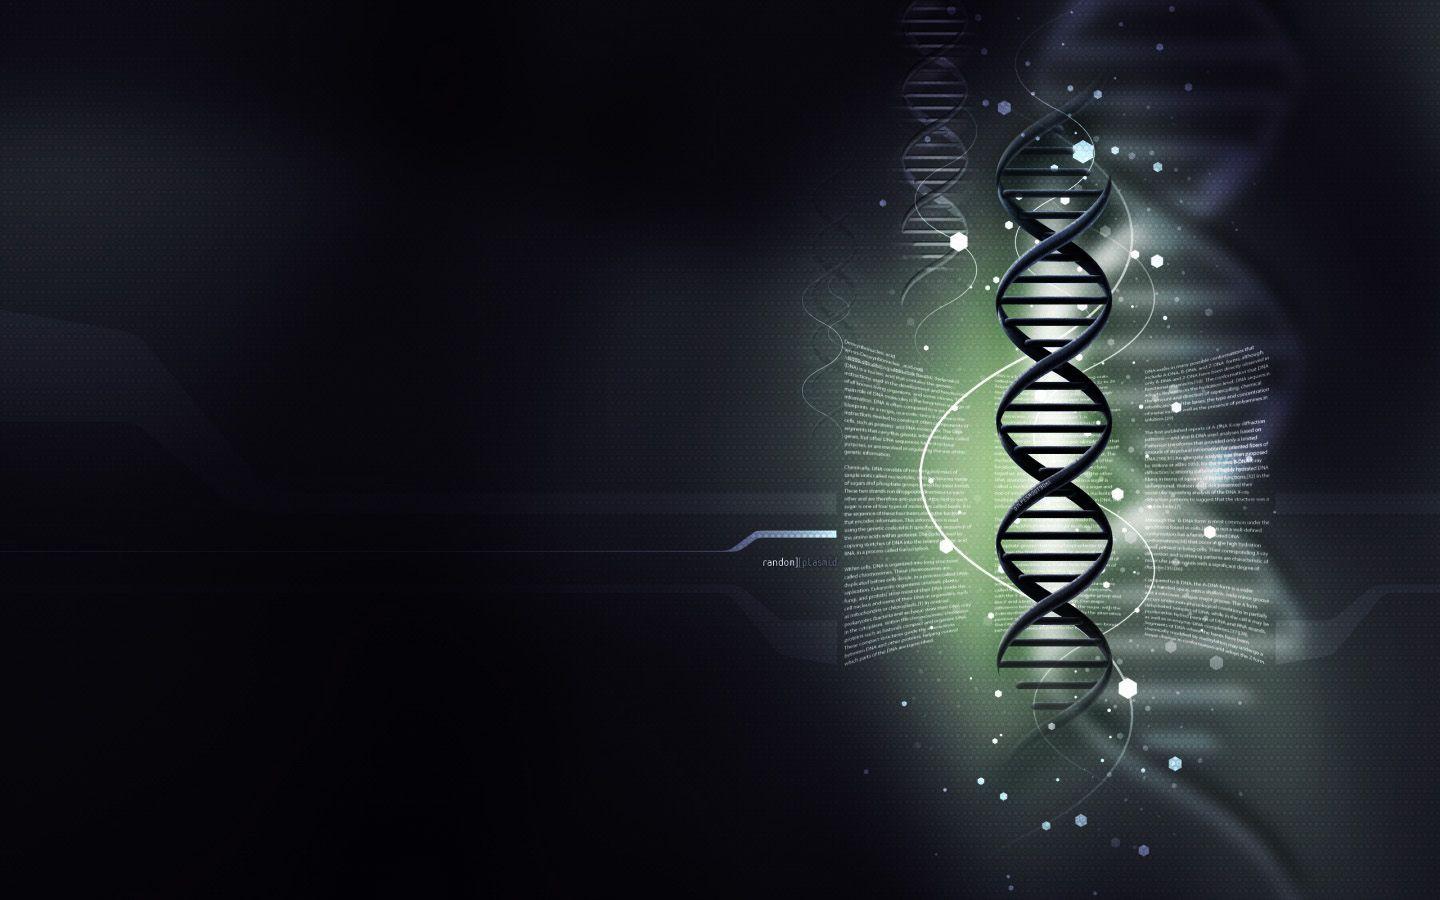 3D DNA Wallpaper Image New. Medical wallpaper, Free desktop wallpaper, Computer wallpaper